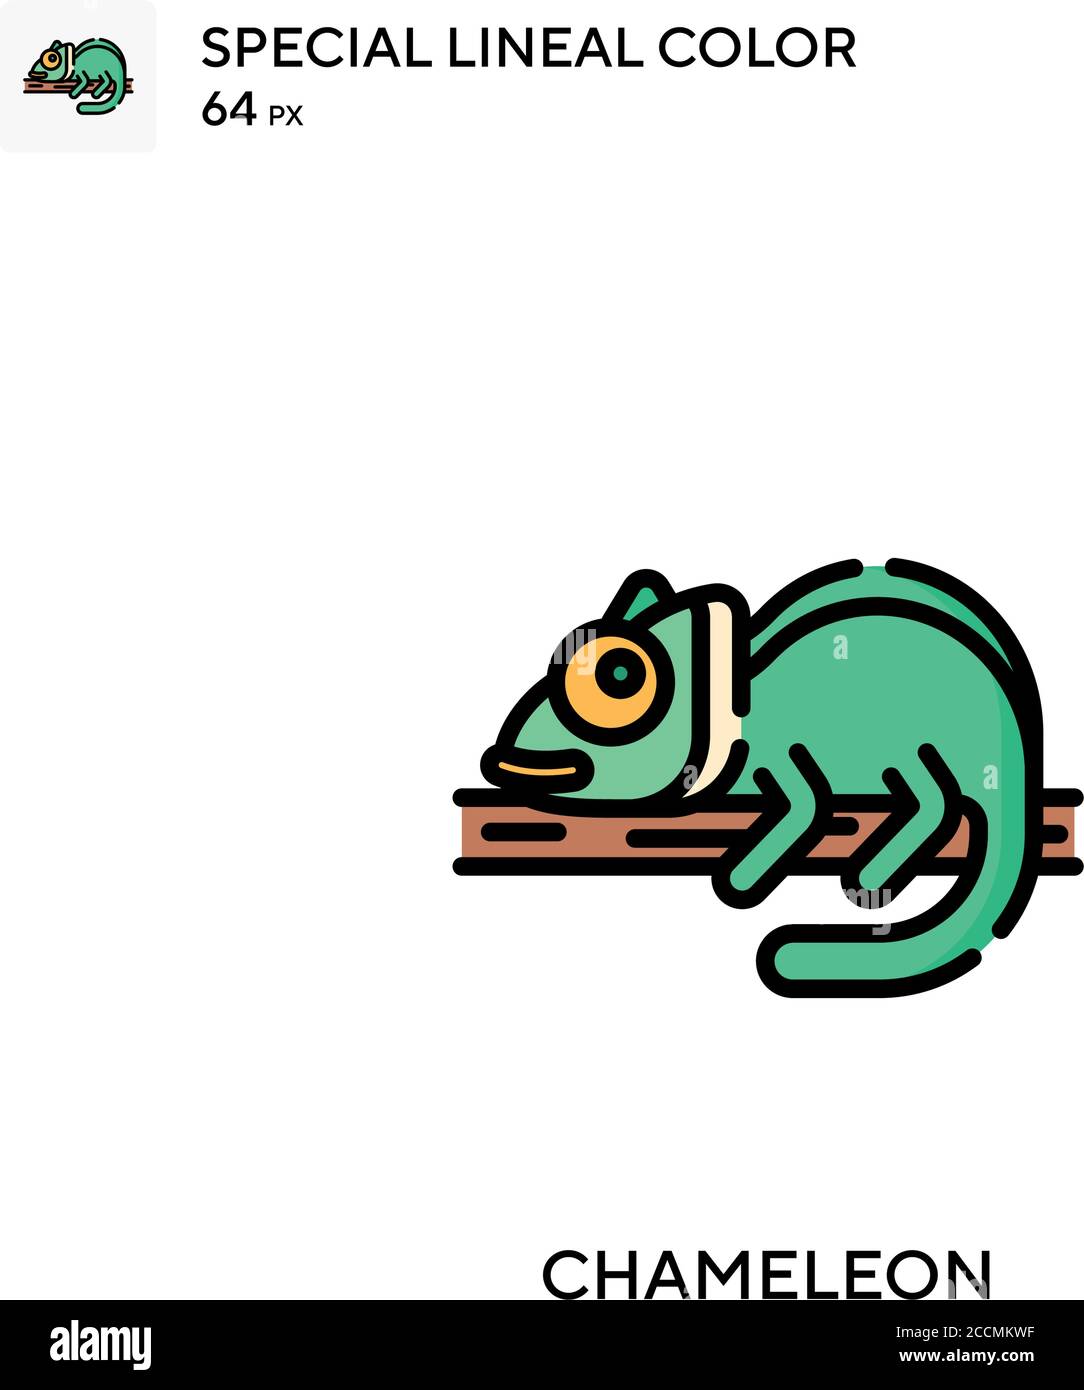 Chameleon Special Lineal-Farbsymbol. Illustration Symbol Design Vorlage für Web mobile UI-Element. Perfekte Farbe modernes Piktogramm auf editierbare Kontur. Stock Vektor